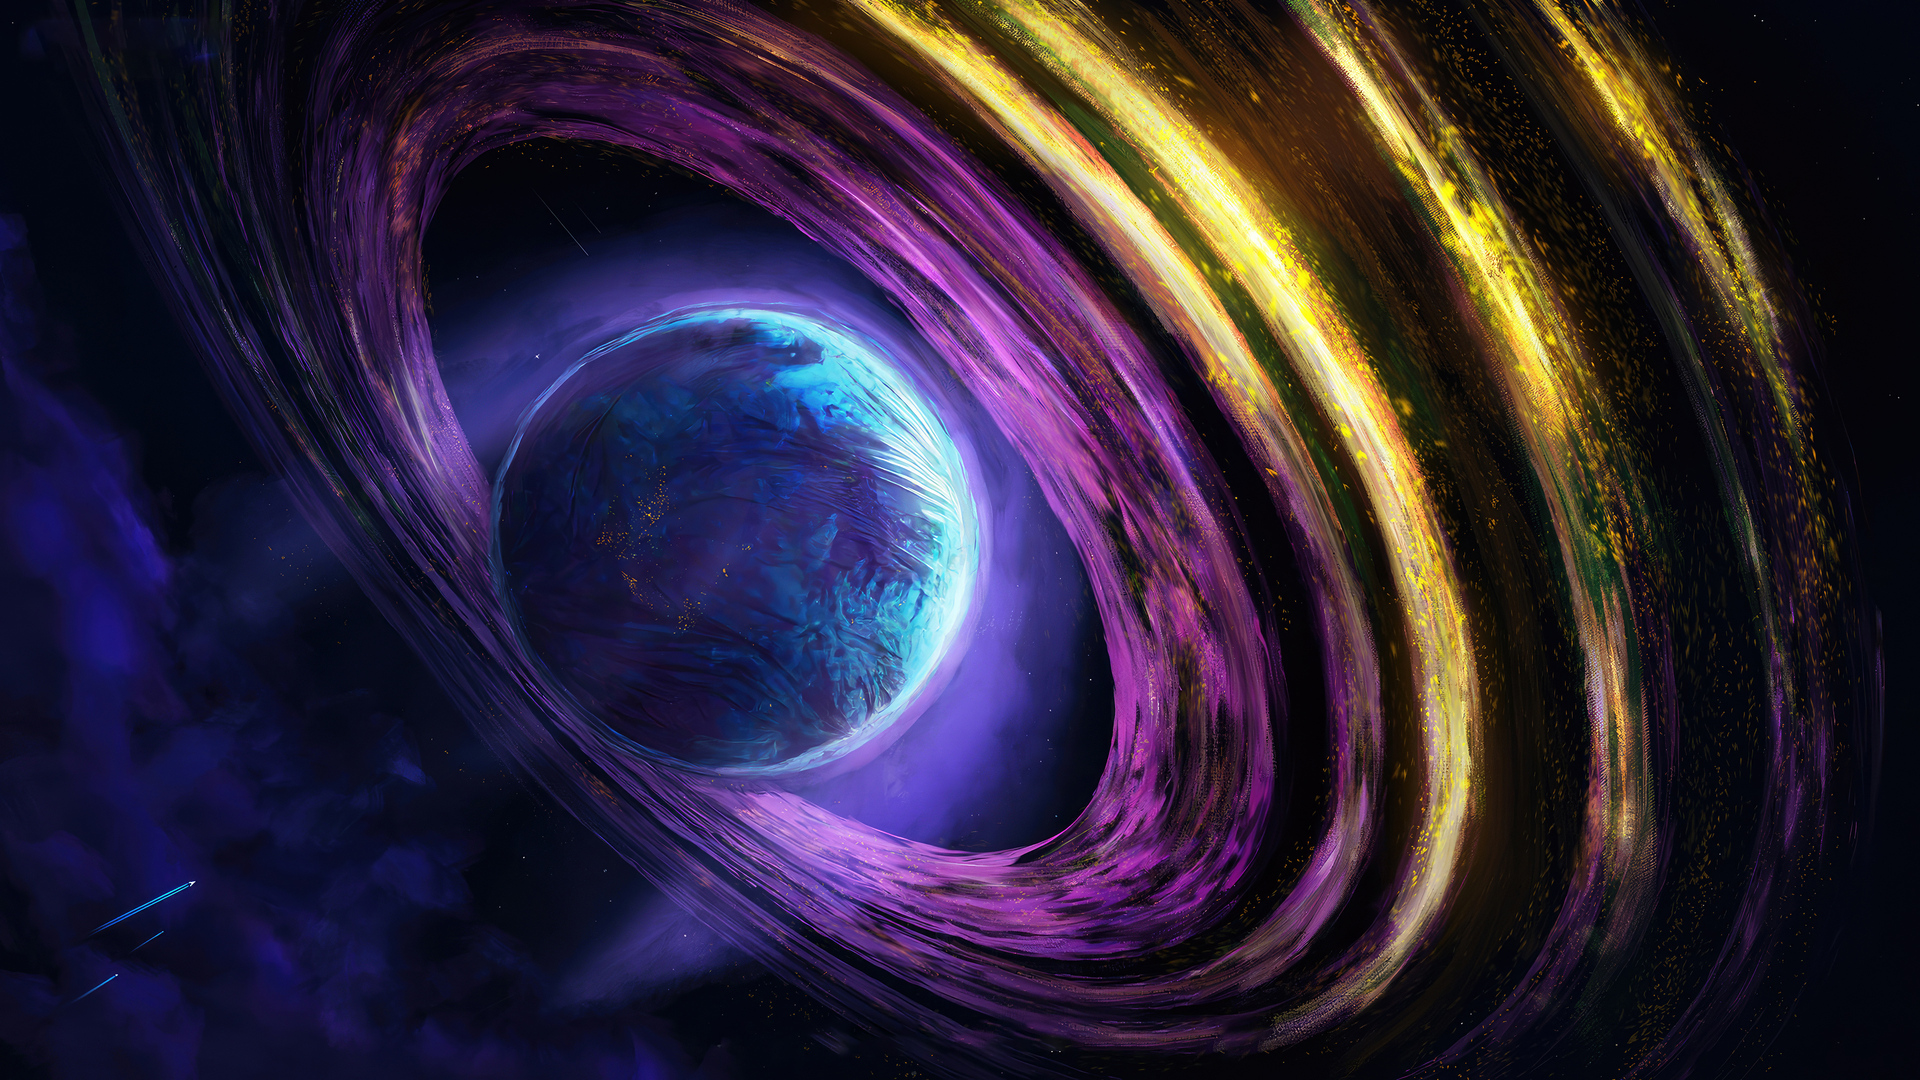 ERA 7 Digital Art Artwork Illustration Space Event Horizon Galaxy Planet Planetary Rings 1920x1080